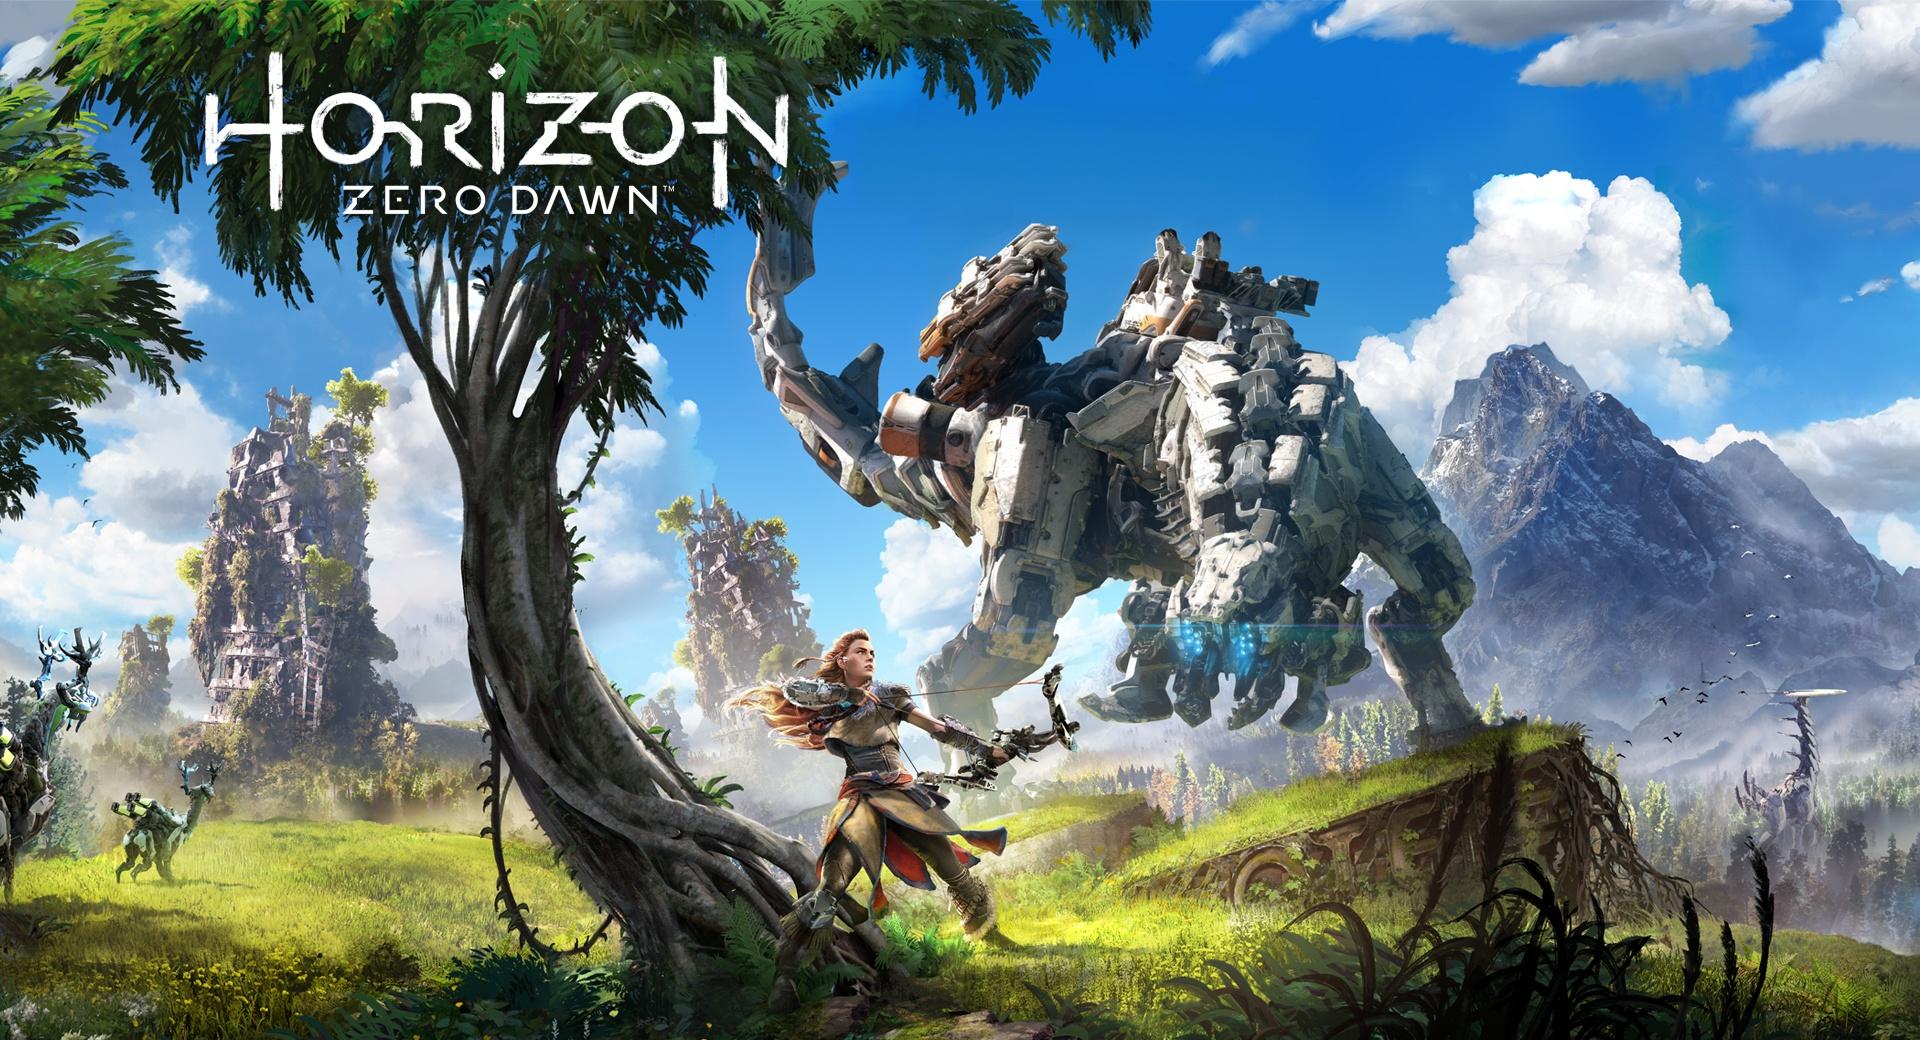 Horizon Zero Dawn 2017 Video Game at 2048 x 2048 iPad size wallpapers HD quality